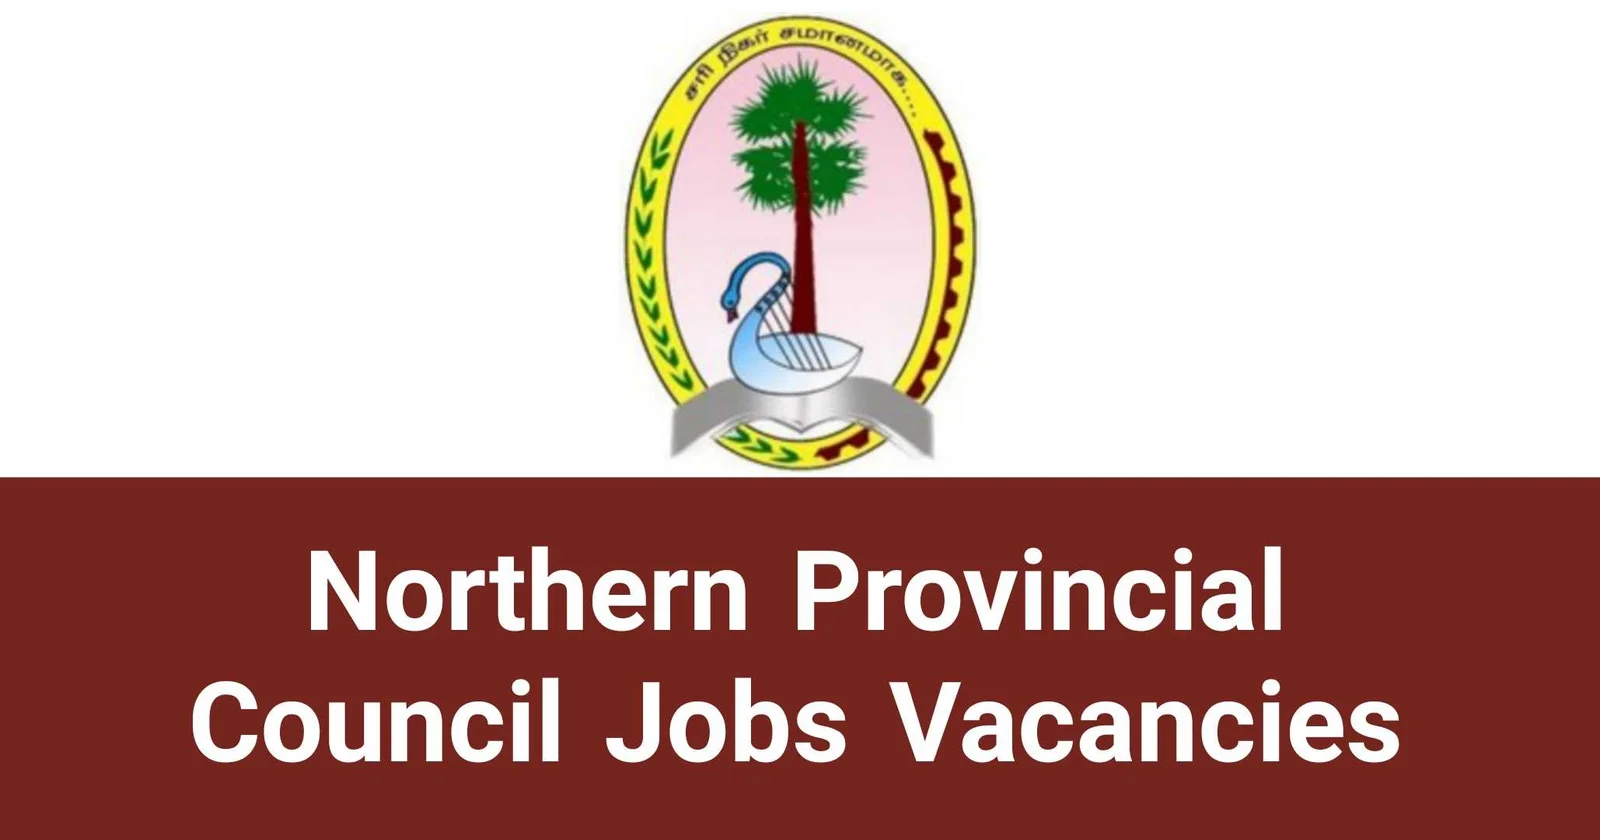 Northern Provincial Council Jobs Vacancies Careers